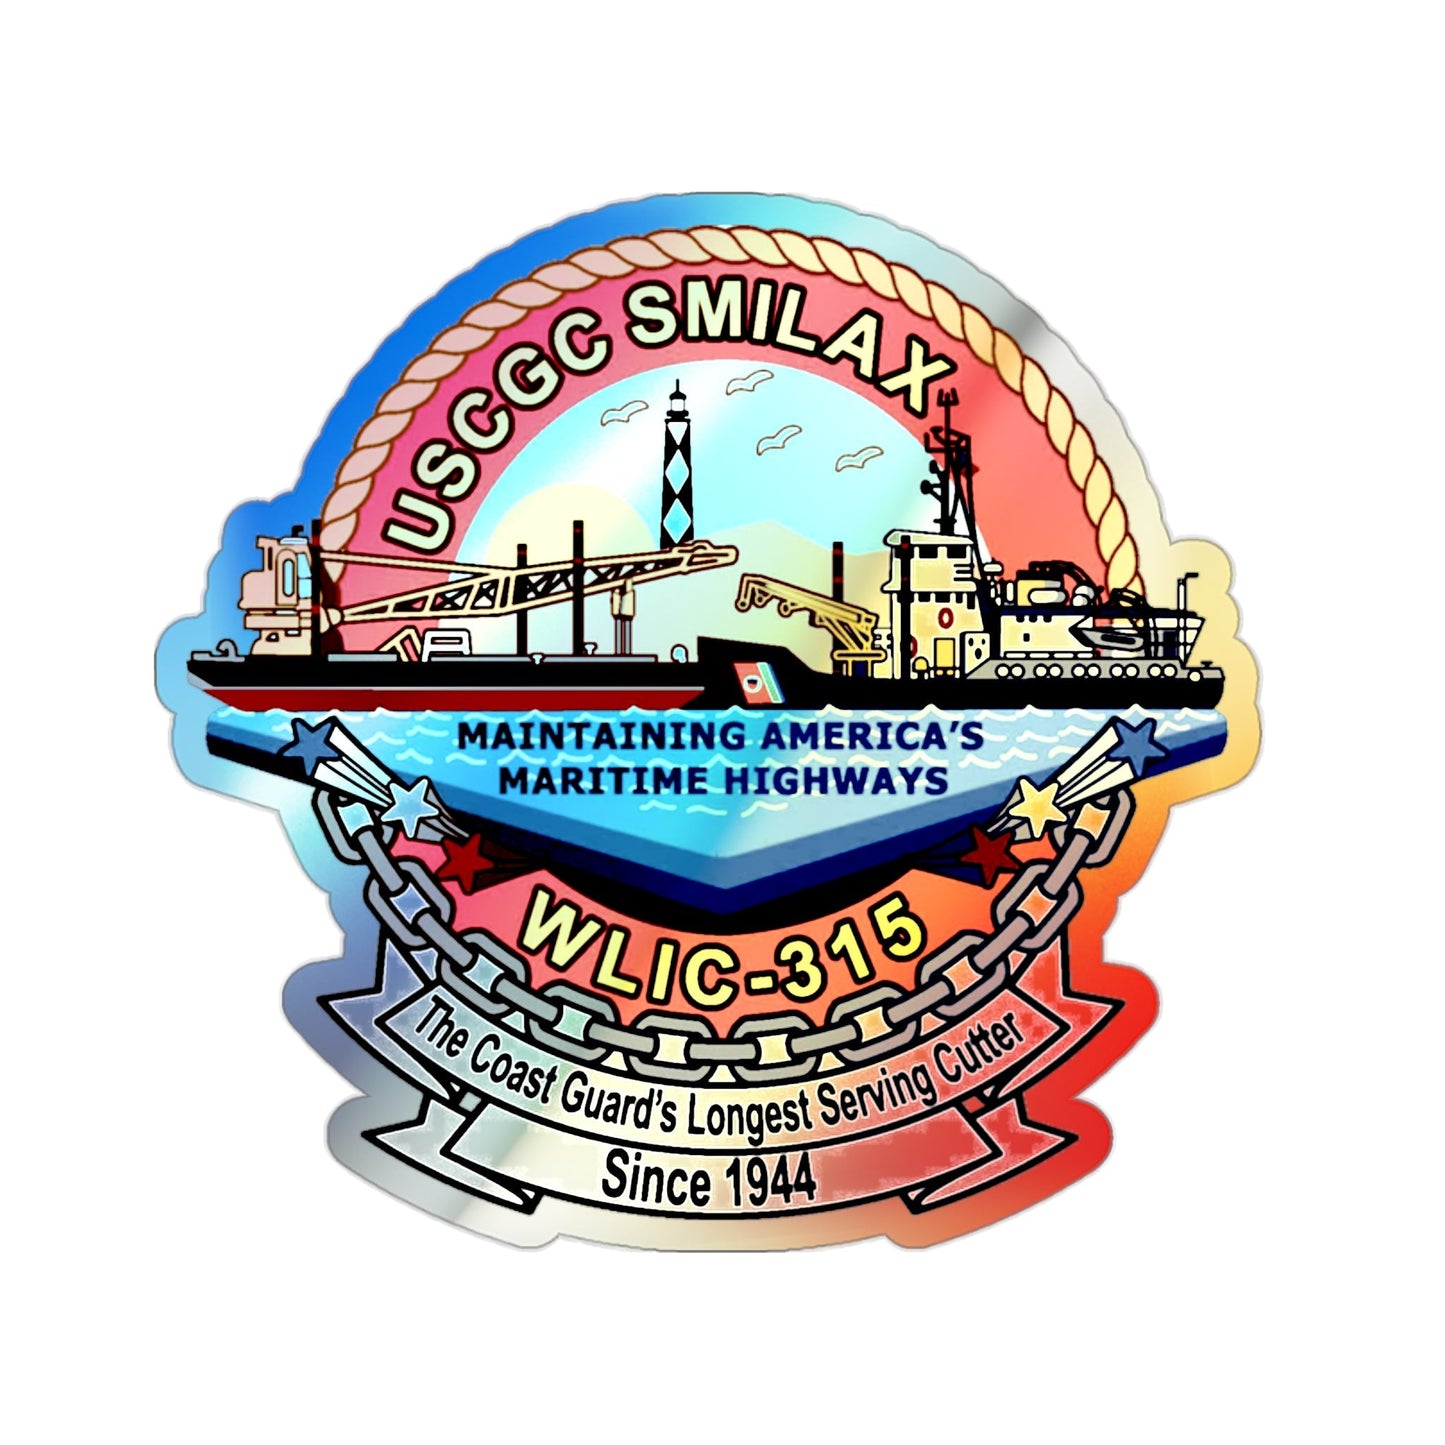 CGC Smilax WLIC 315 (U.S. Coast Guard) Holographic STICKER Die-Cut Vinyl Decal-2 Inch-The Sticker Space